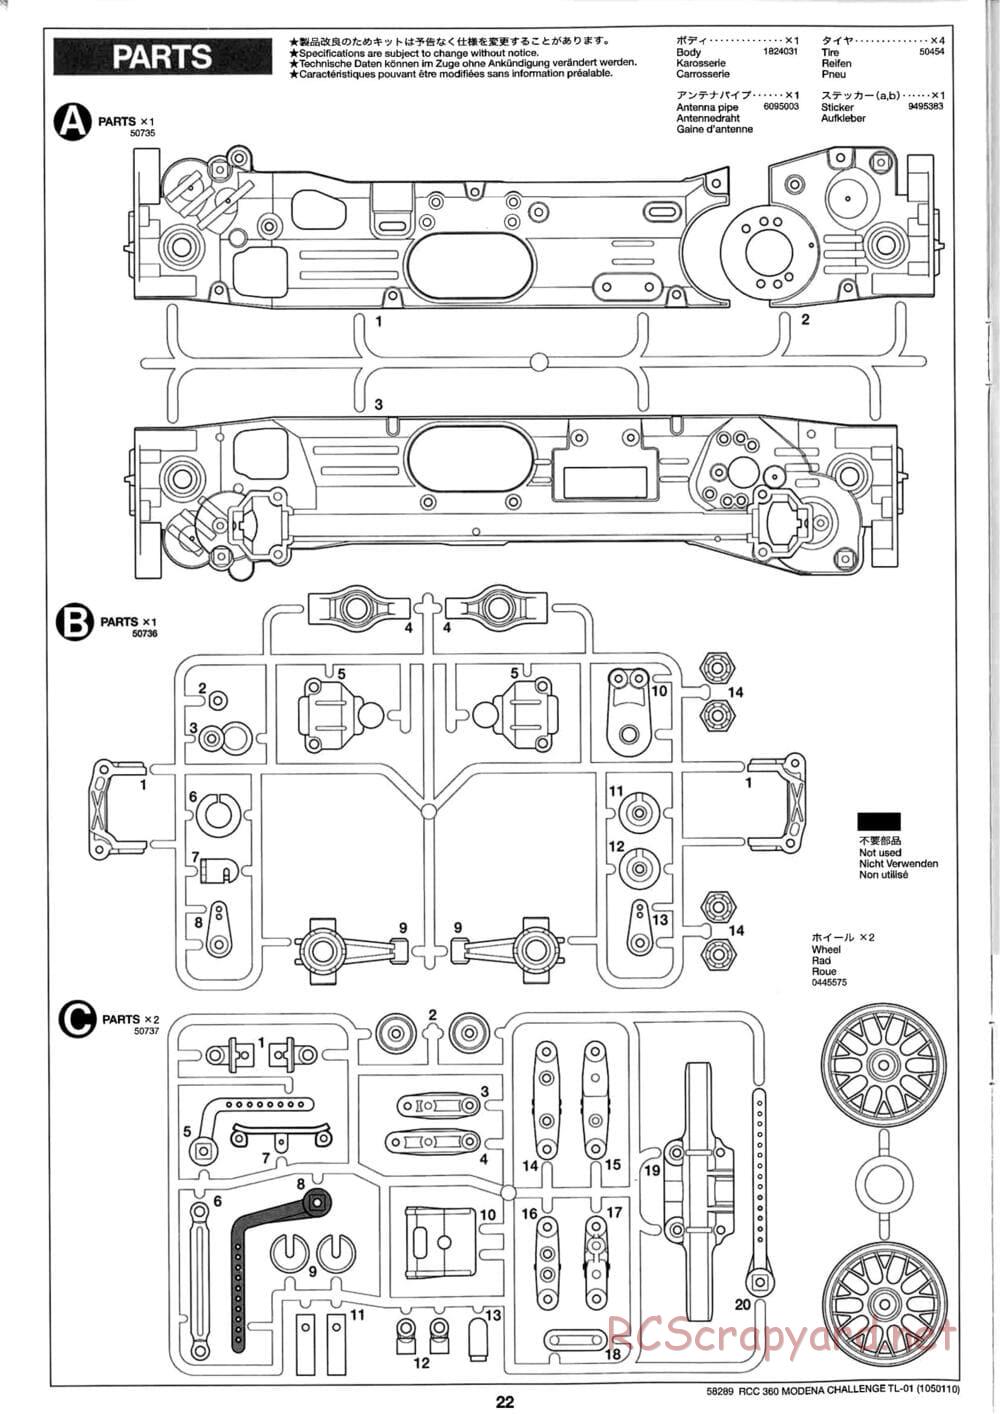 Tamiya - Ferrari 360 Modena Challenge - TL-01 Chassis - Manual - Page 22